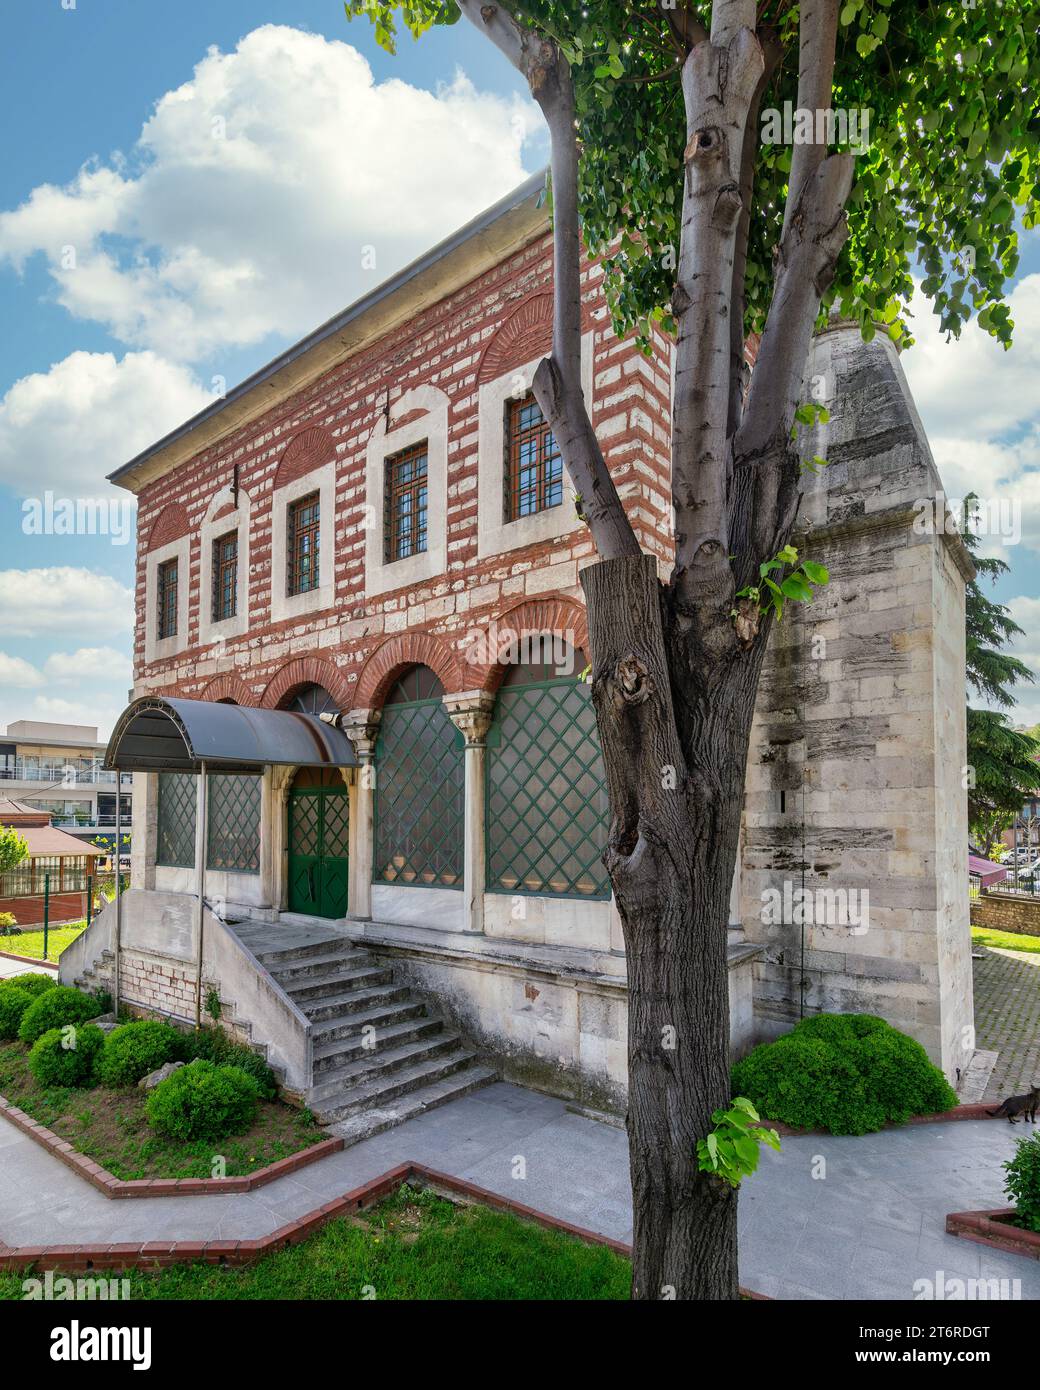 Sepsefa Mosque, aka Sepsefa Hatun Mosque, an Ottoman era mosque, built by Fatma Sepsefa Hatun in 1787, located in Ataturk Boulevard, Fatih district, Istanbul, Turkey Stock Photo